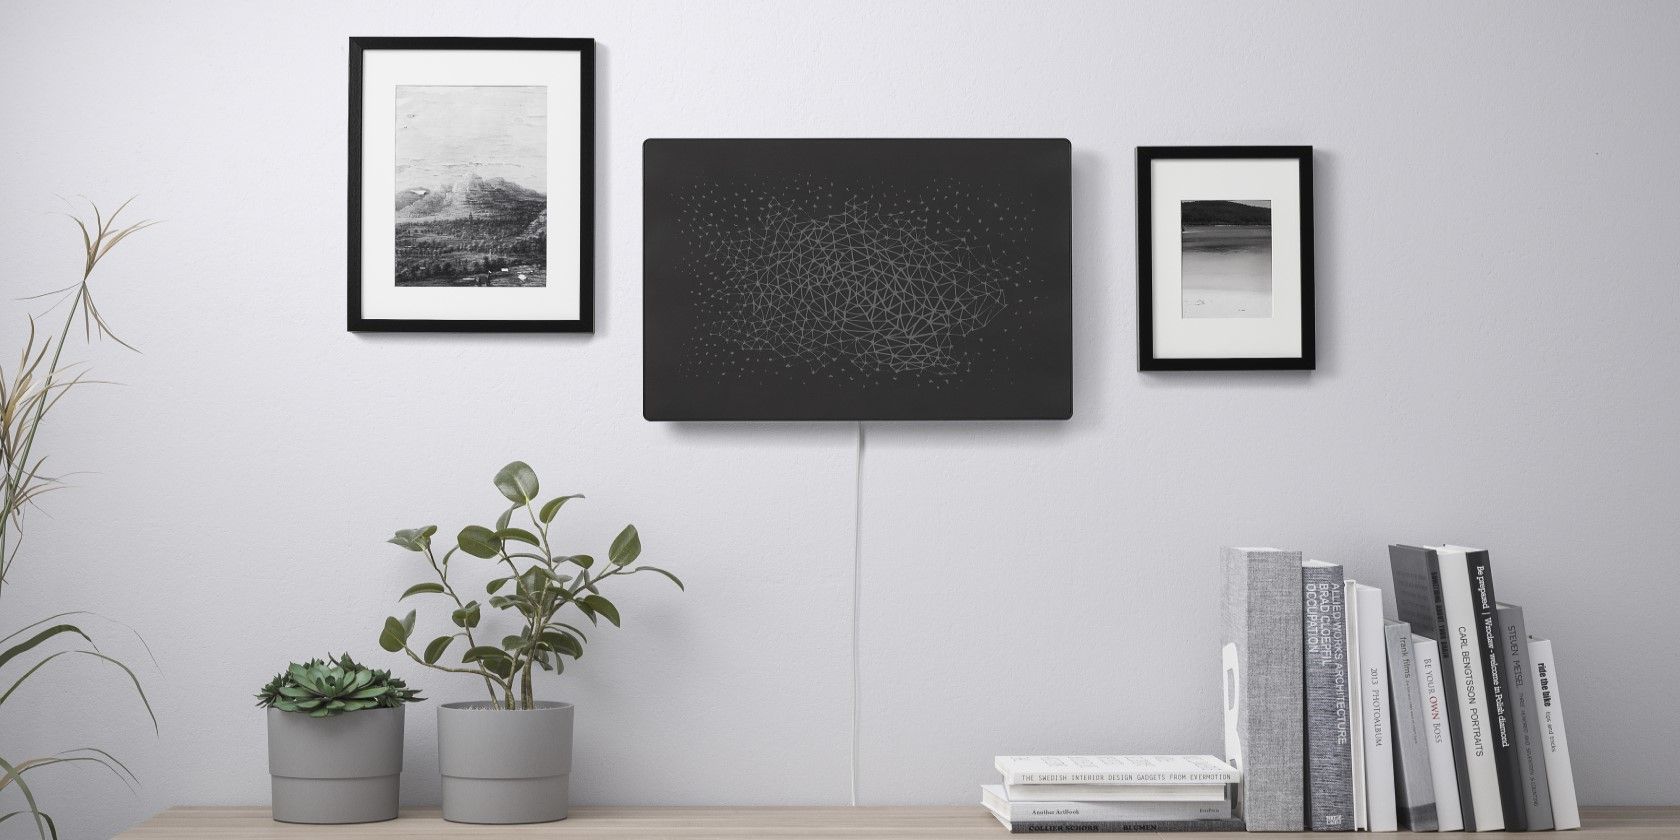 Ikea Sonos picture frame speaker